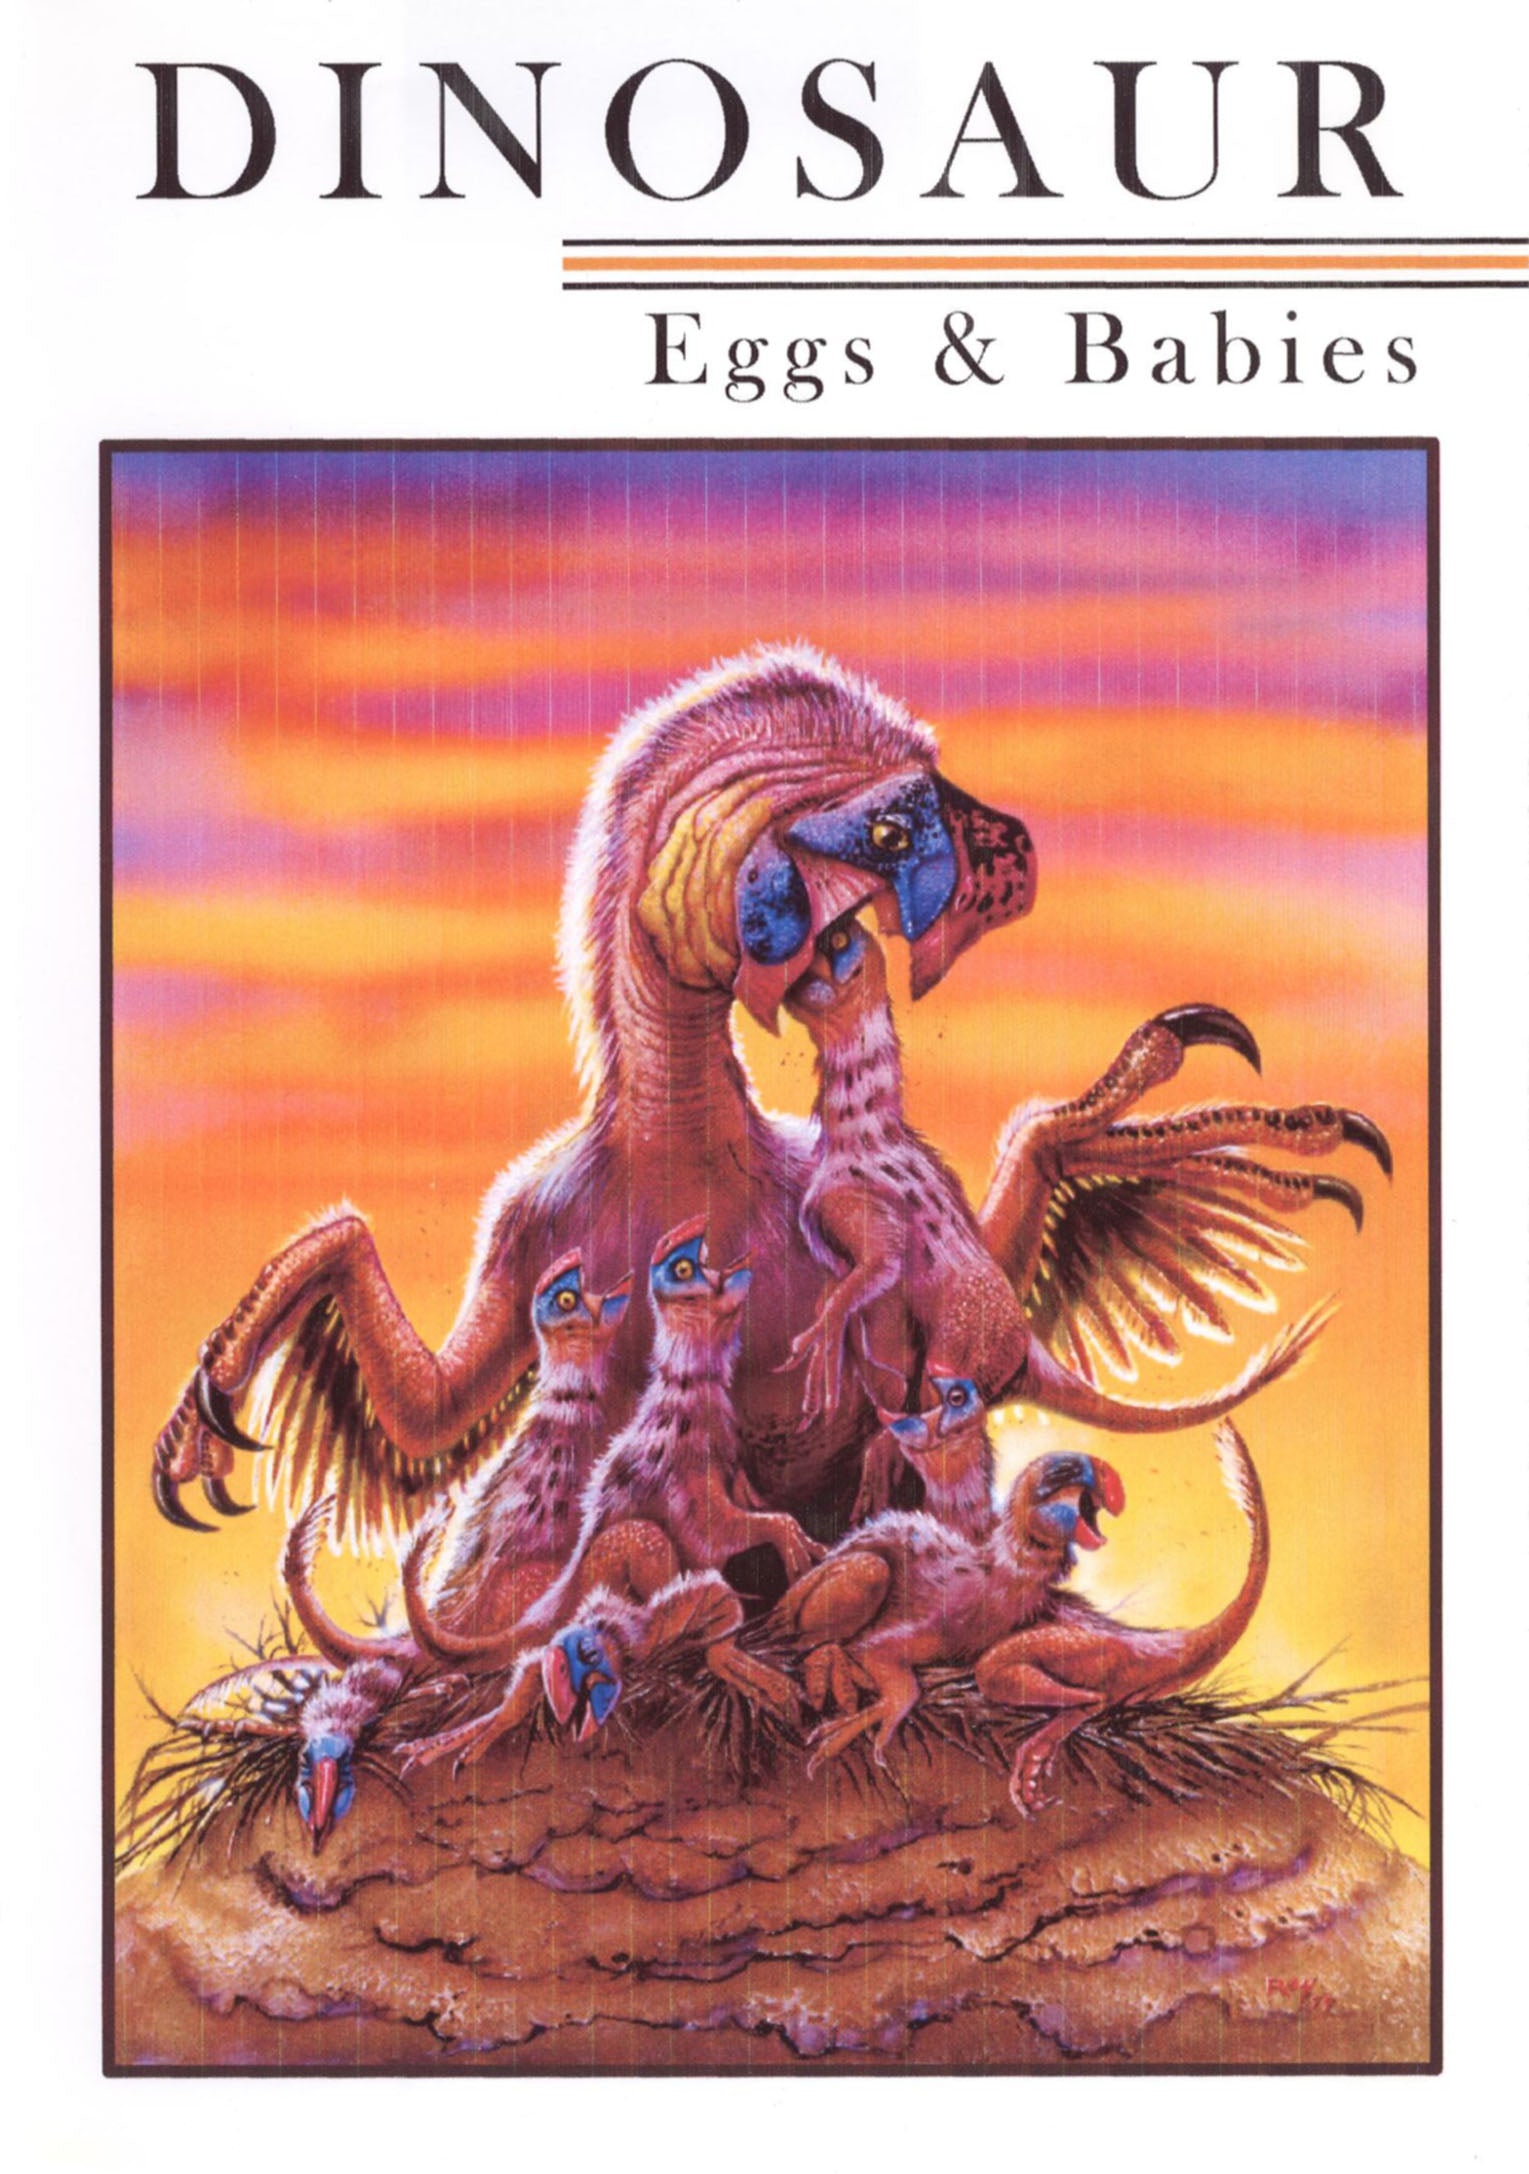 Dinosaur Eggs & Babies cover art